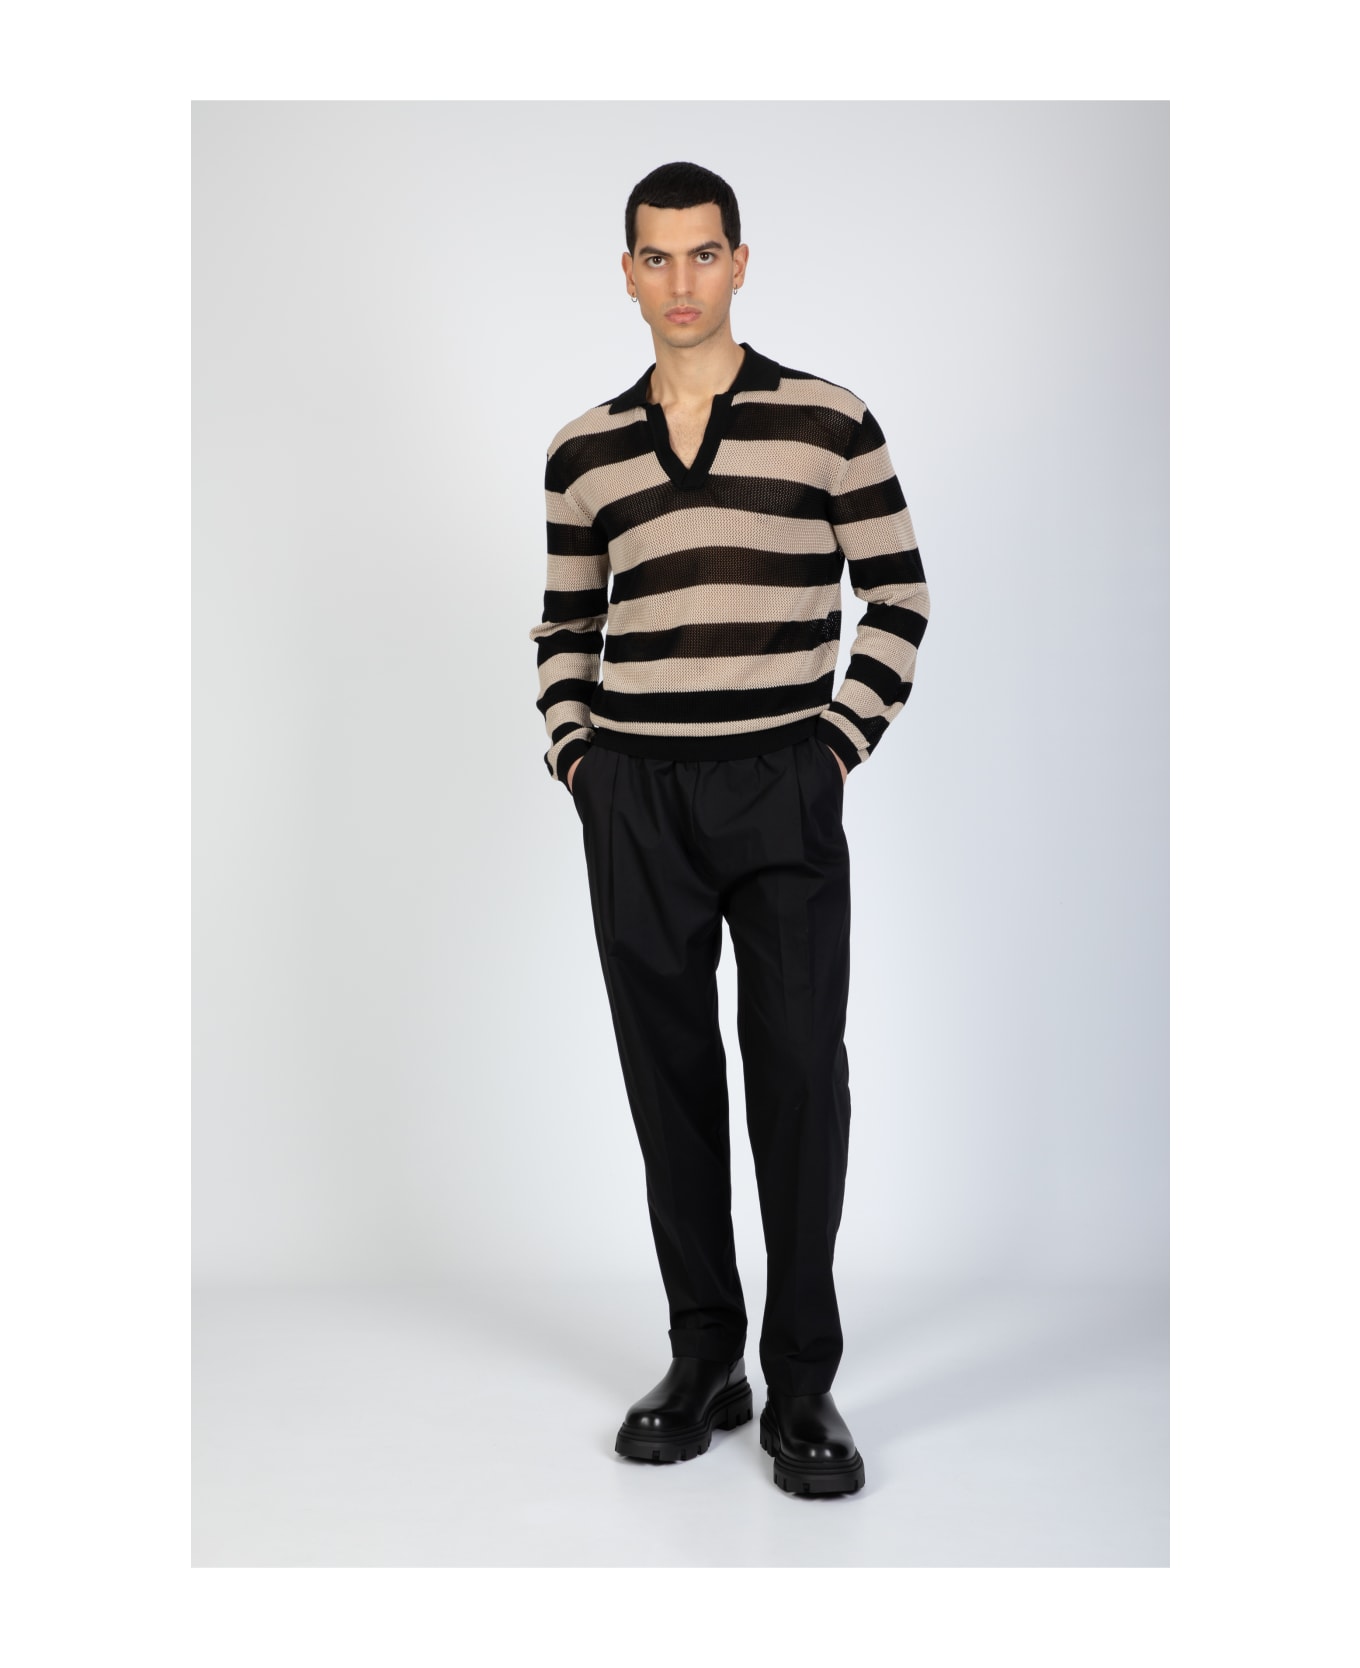 Laneus Mesh Polo Shirt Long Sleeves Man Beige and black striped mesh knitted polo shirt - Mesh polo shirt - Nero/beige